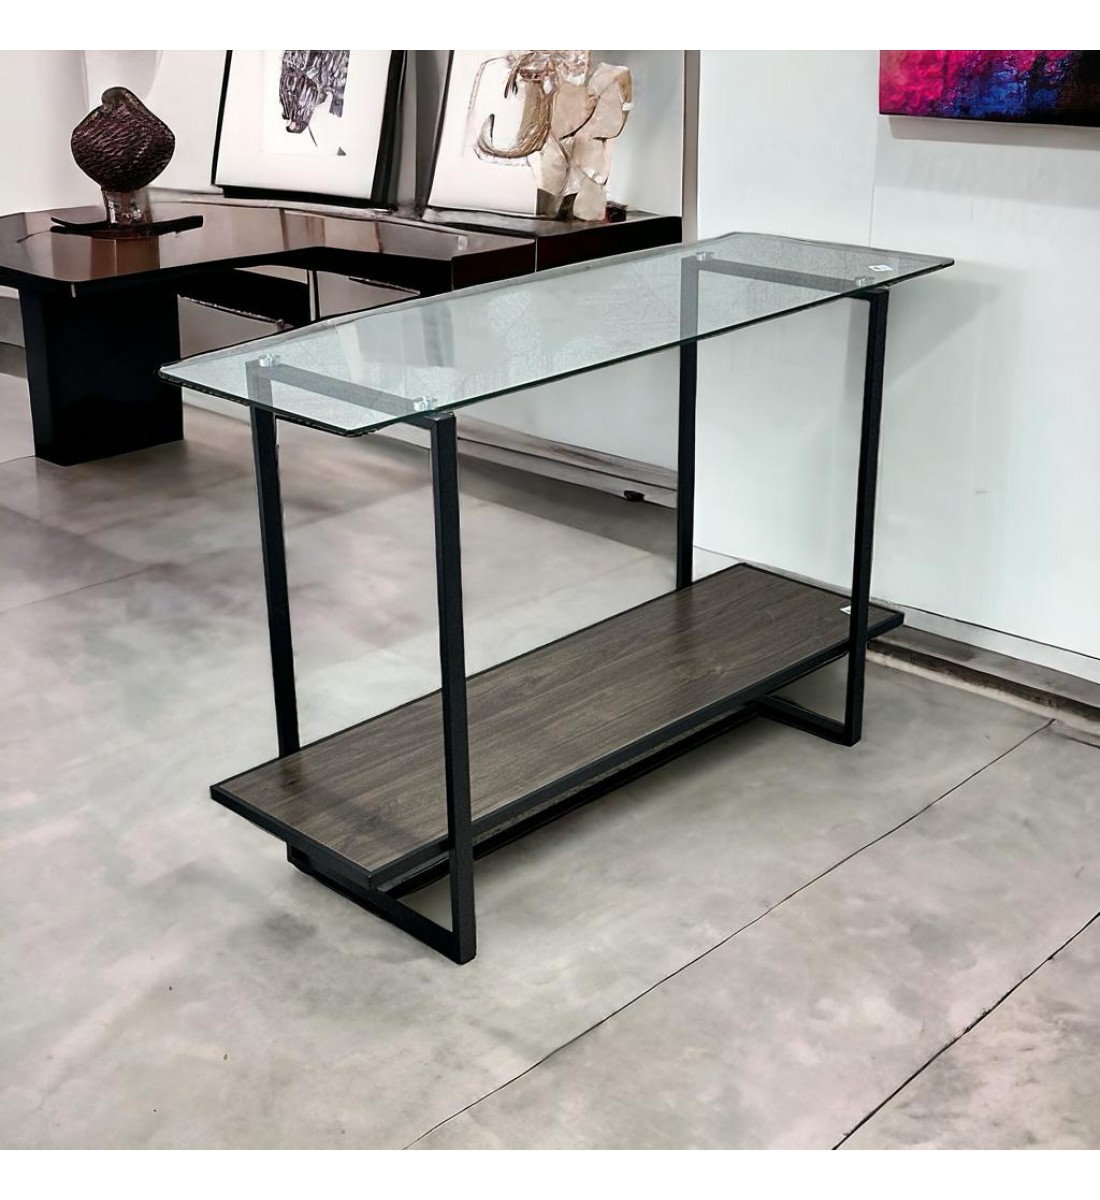 طاولة مدخل معدن و خشب ام دي اف و سطح زجاج بني و اسود - 40×120×80 سم